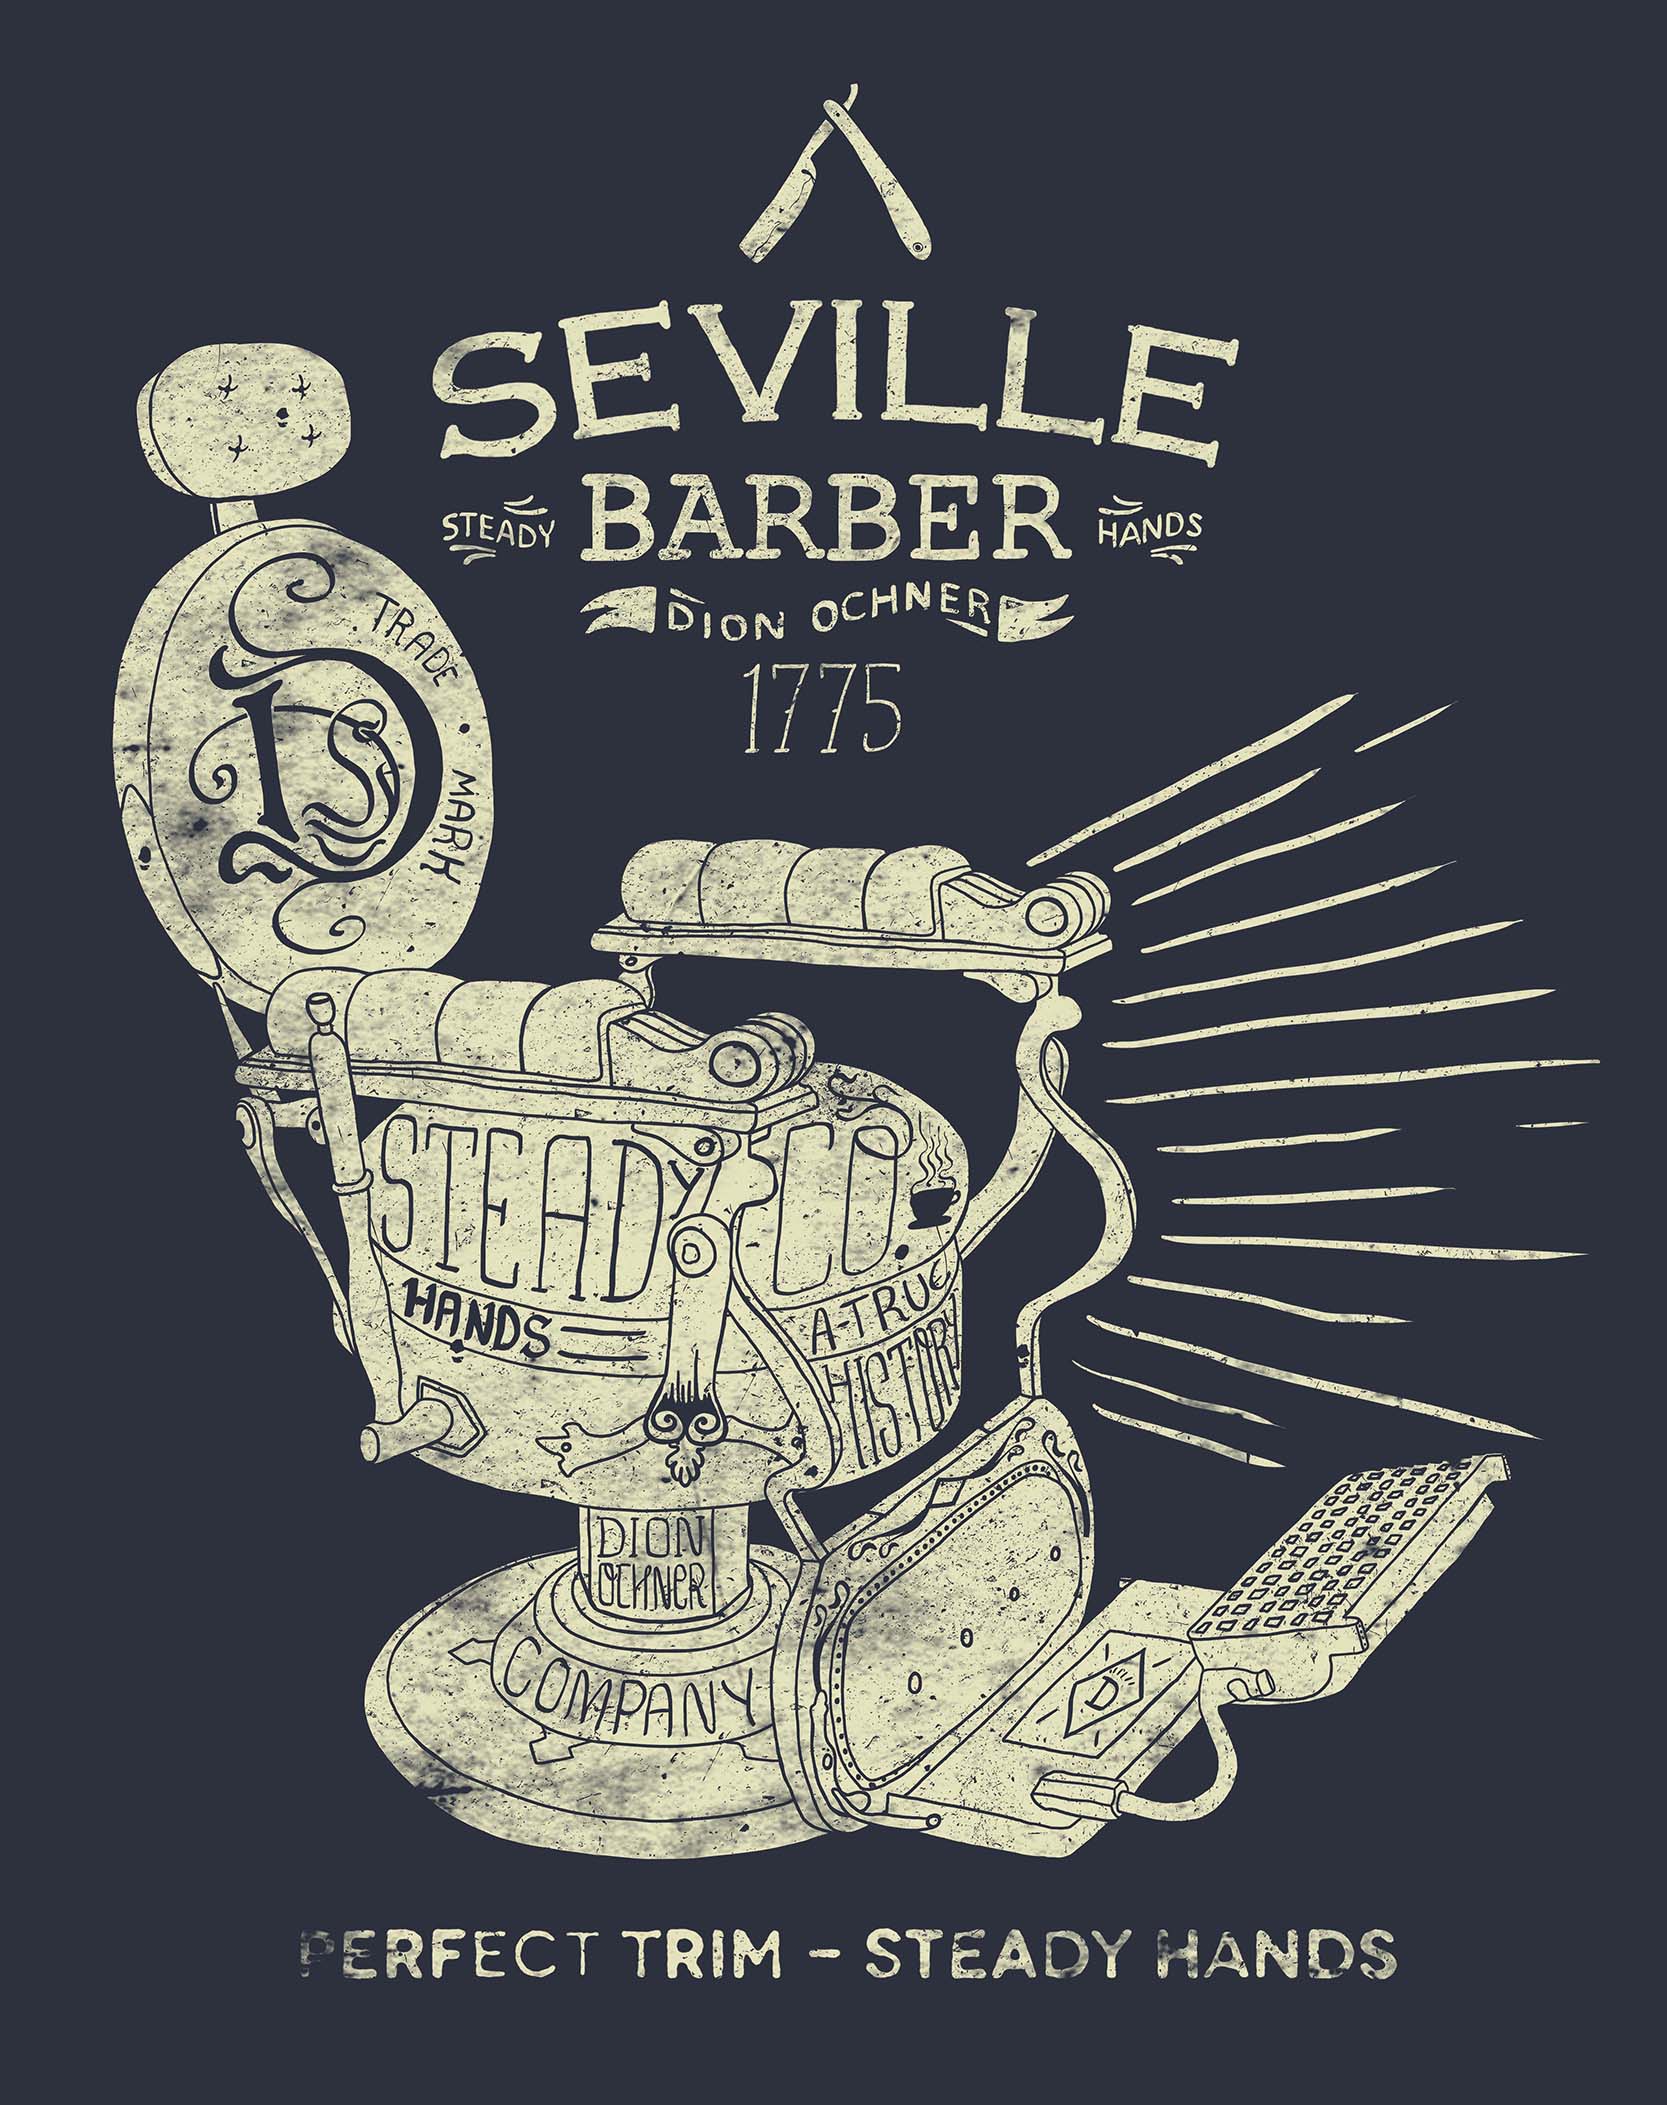 03_studio_blanka-seville-barber